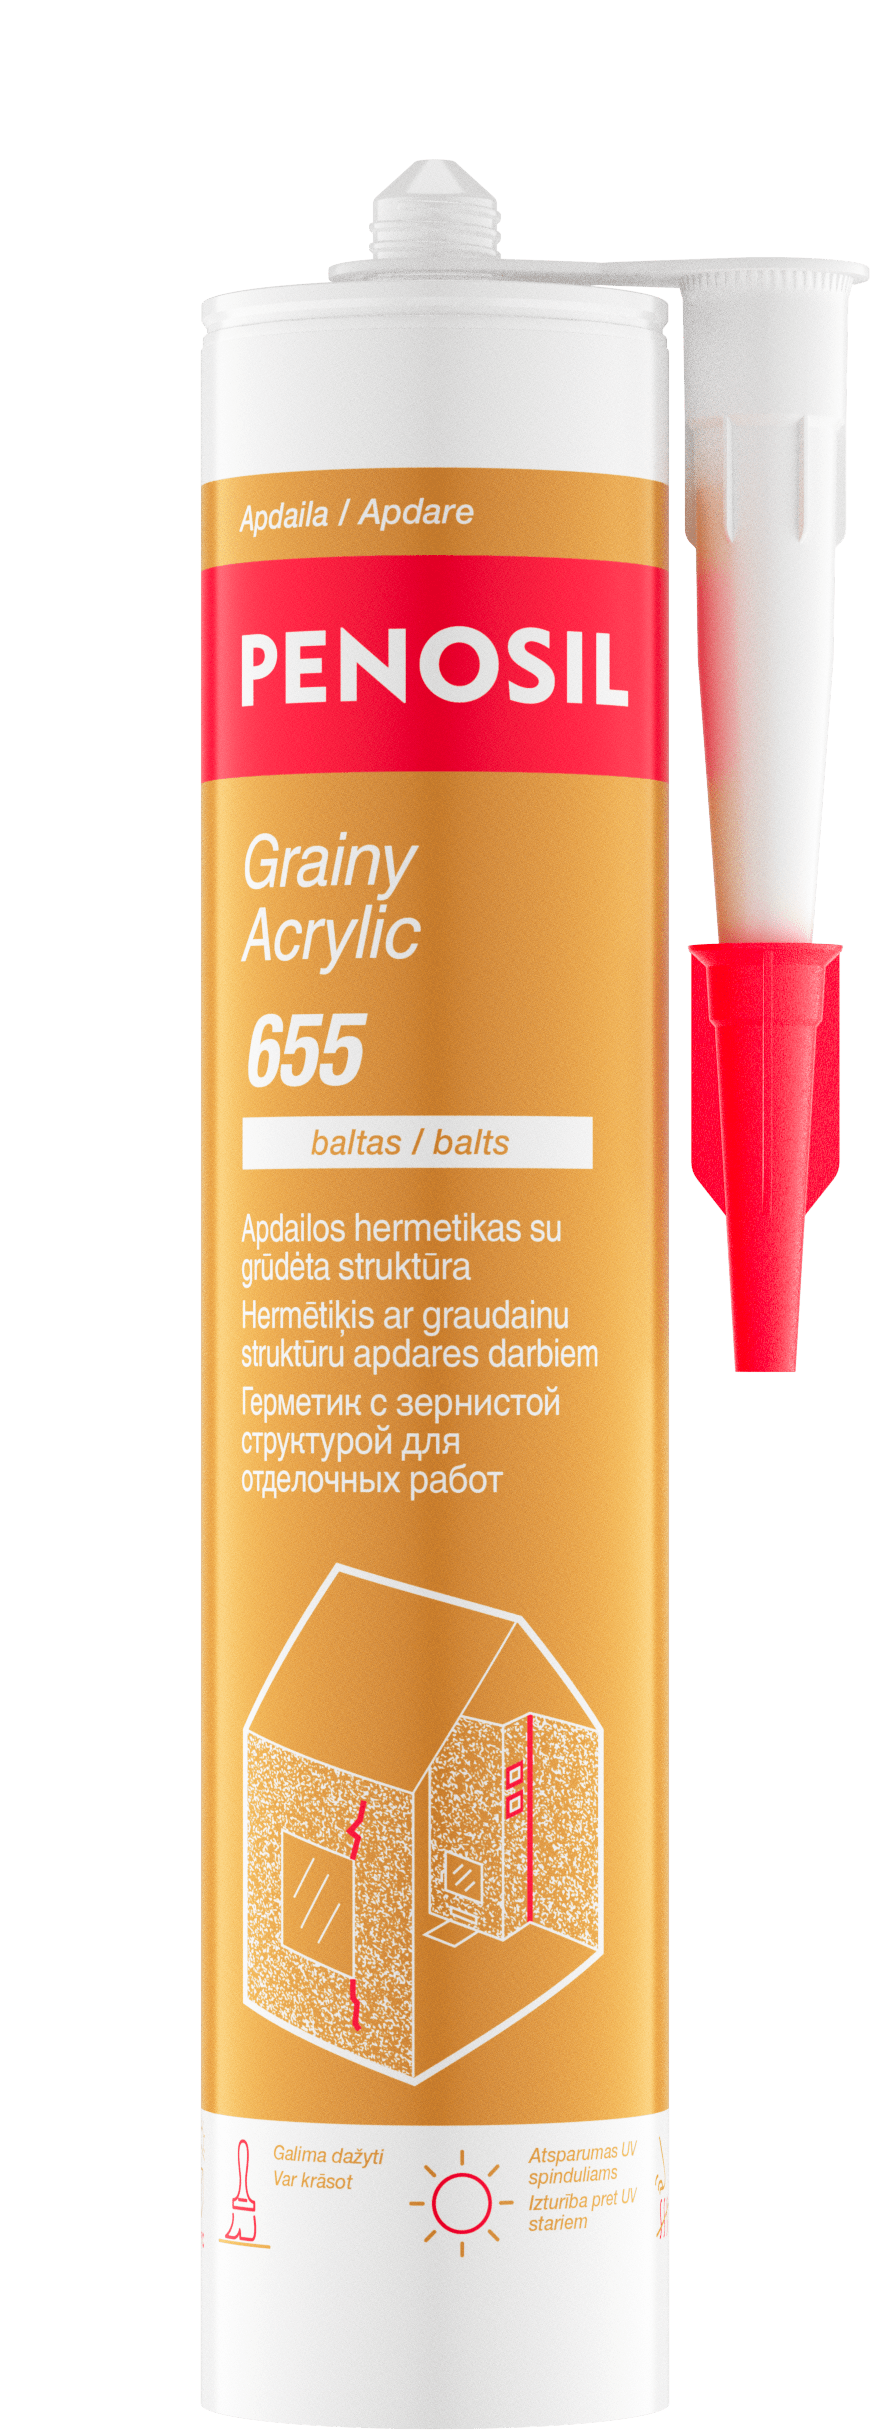 penosil Grainy Acrylic 655 